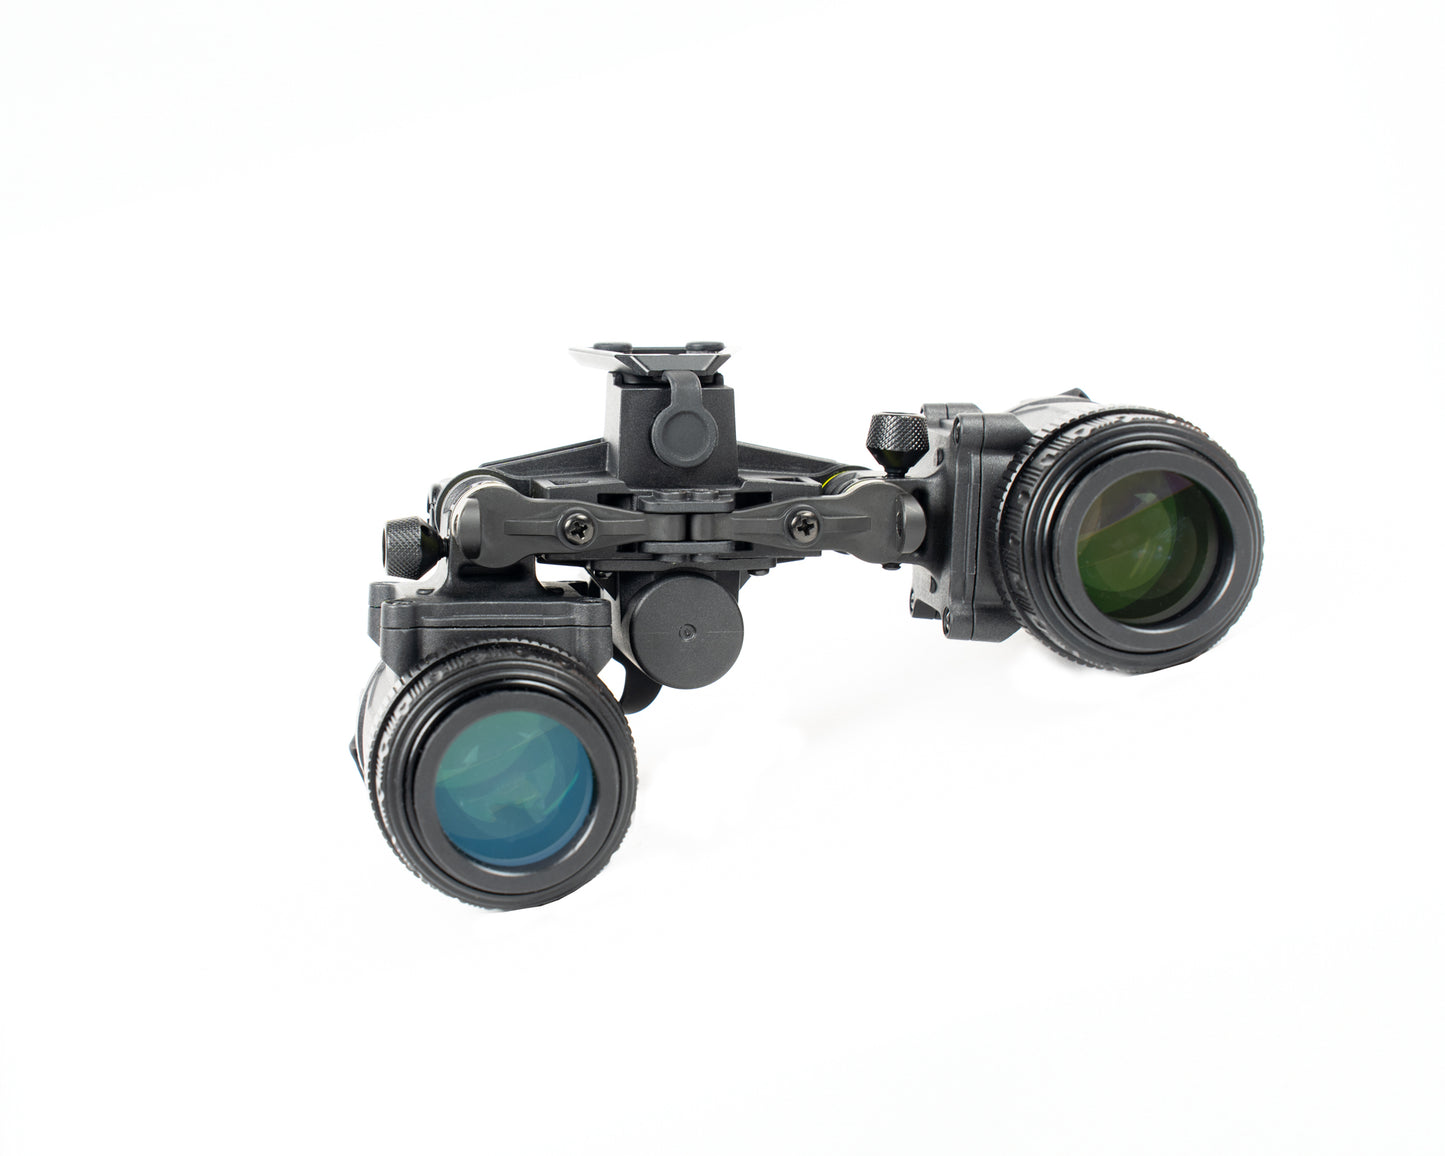 Infiray Jerry-31 Night Vision Binocular